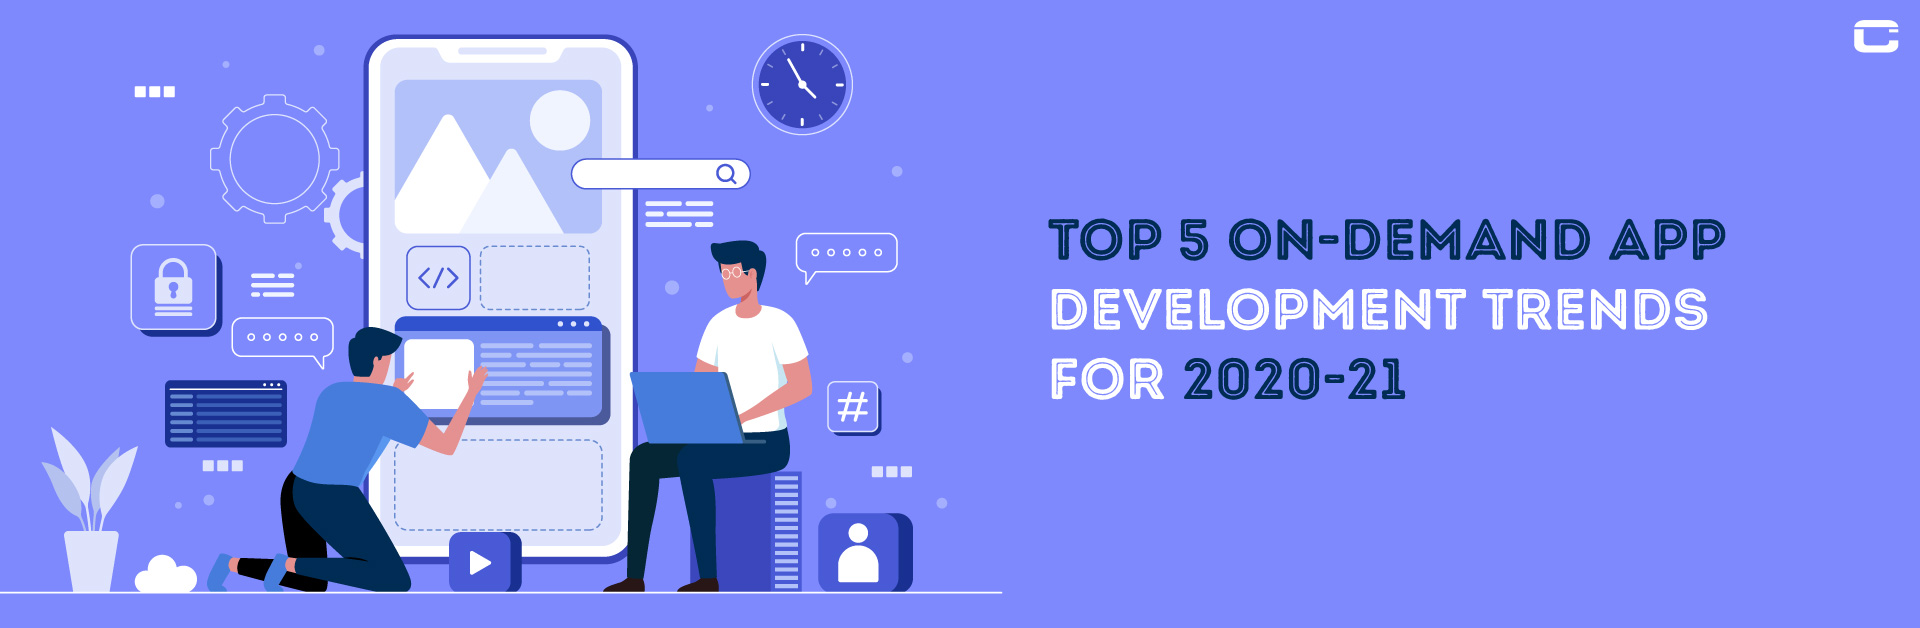 Top 5 On-Demand App Development Trends for 2020-21